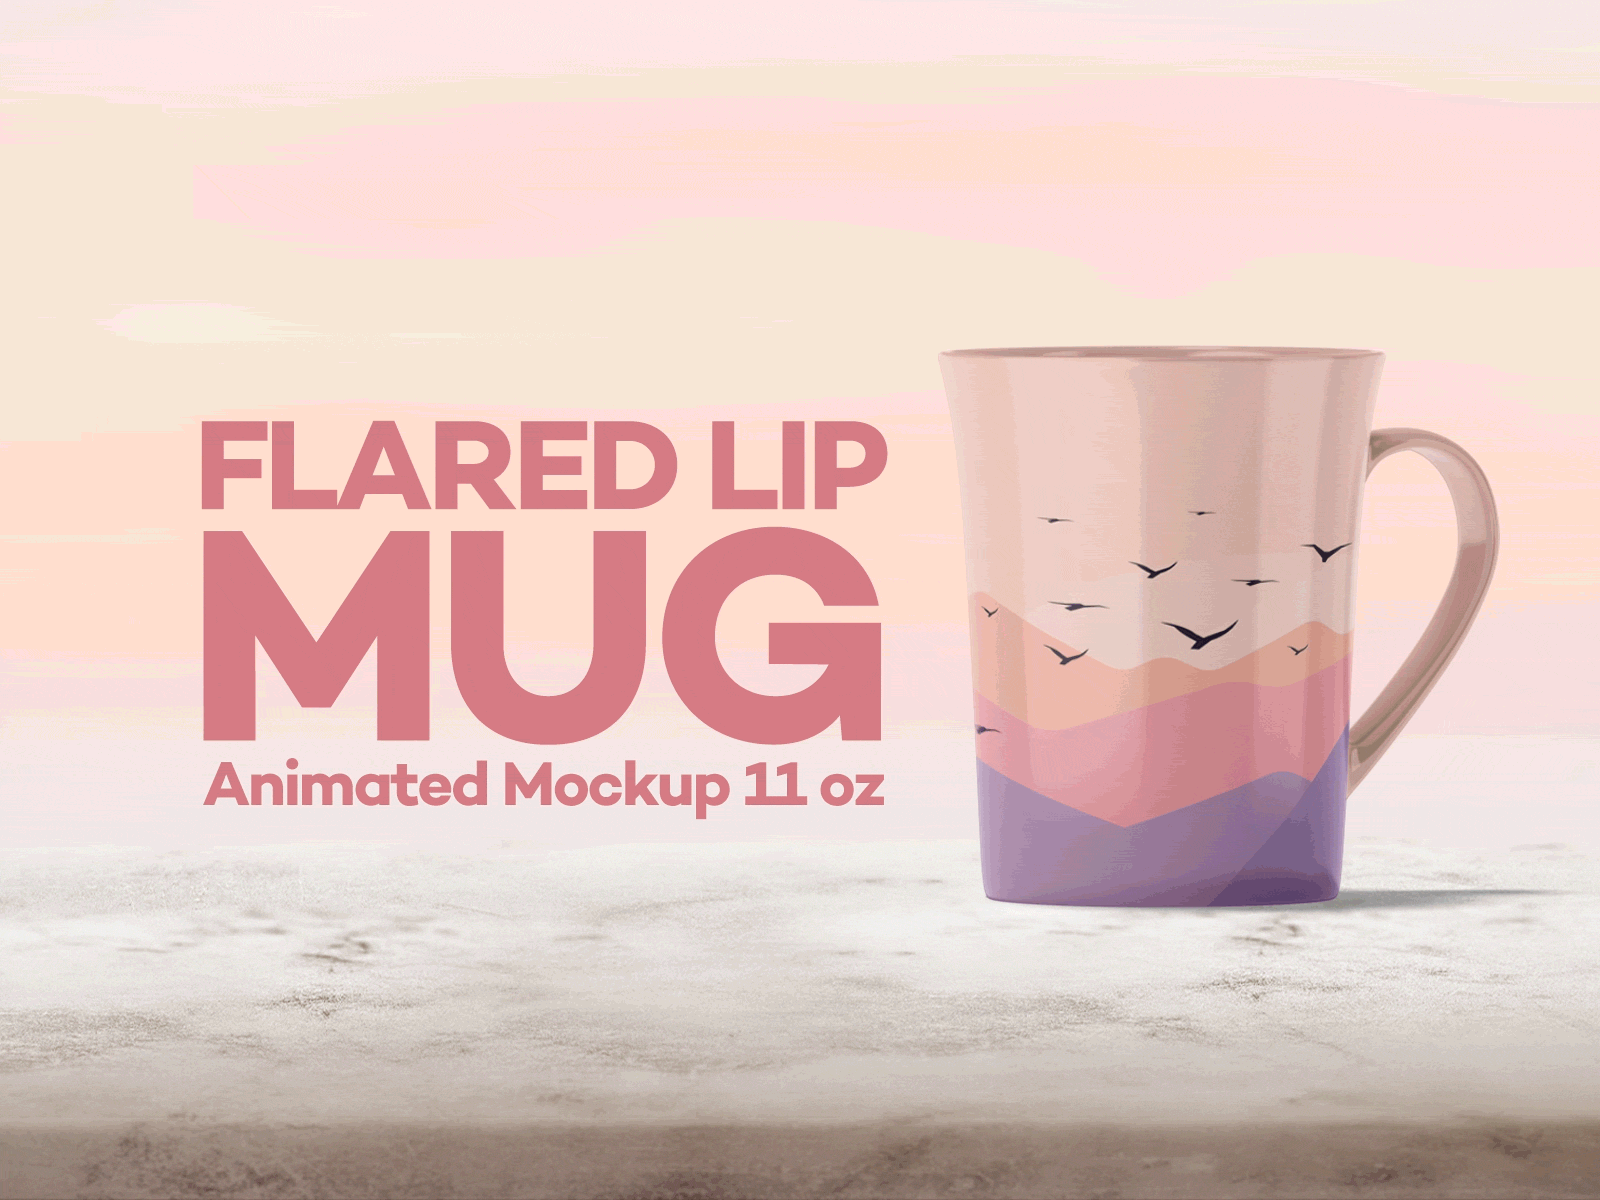 Flared Lip Mug Animated Mockup 11oz 11 oz animated cup download flared mockup mug psd utensil